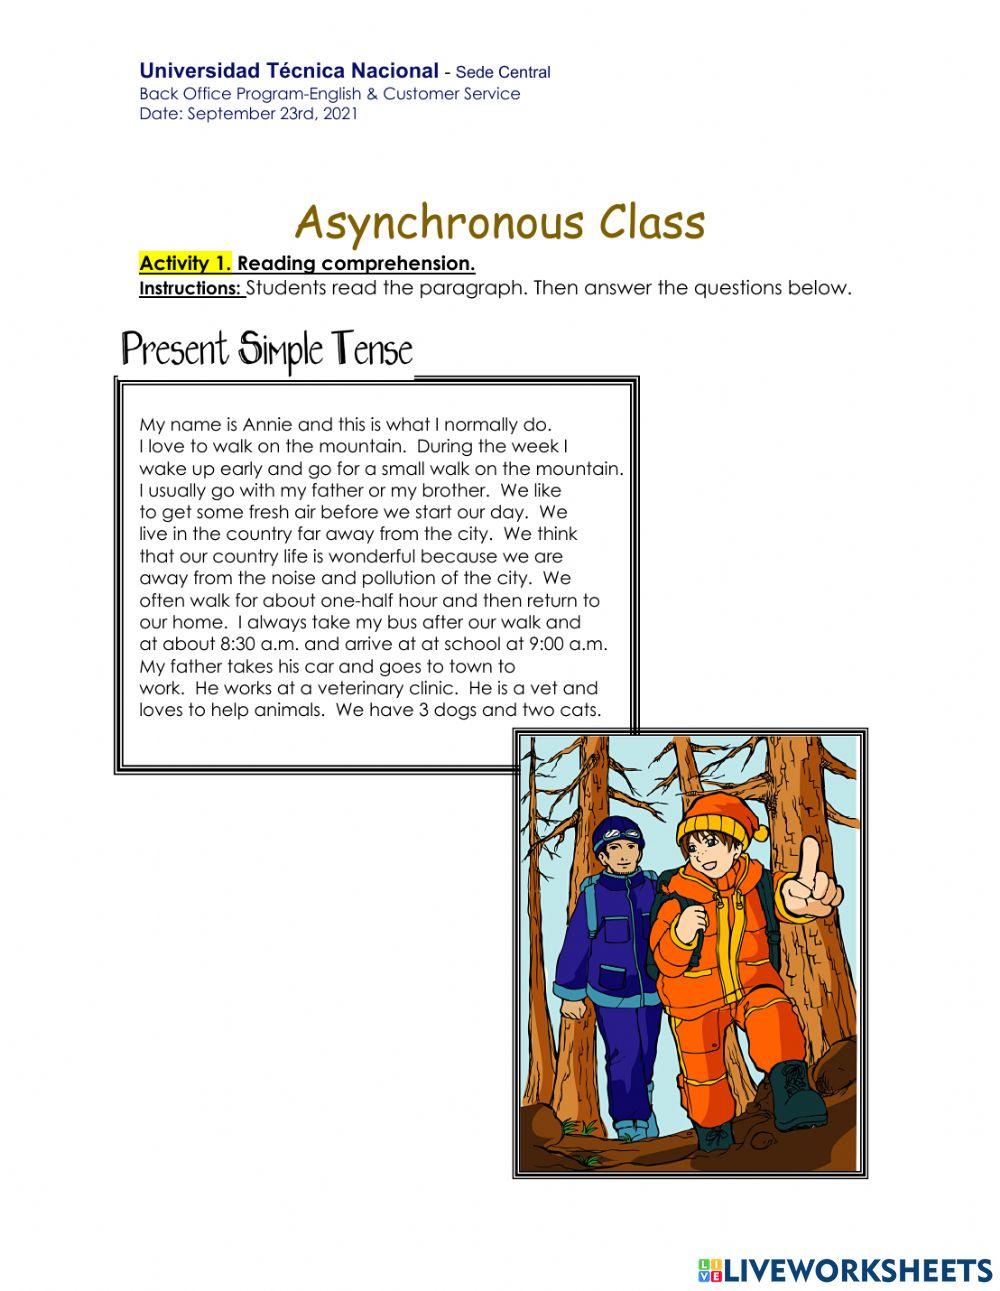 Asynchronous Class